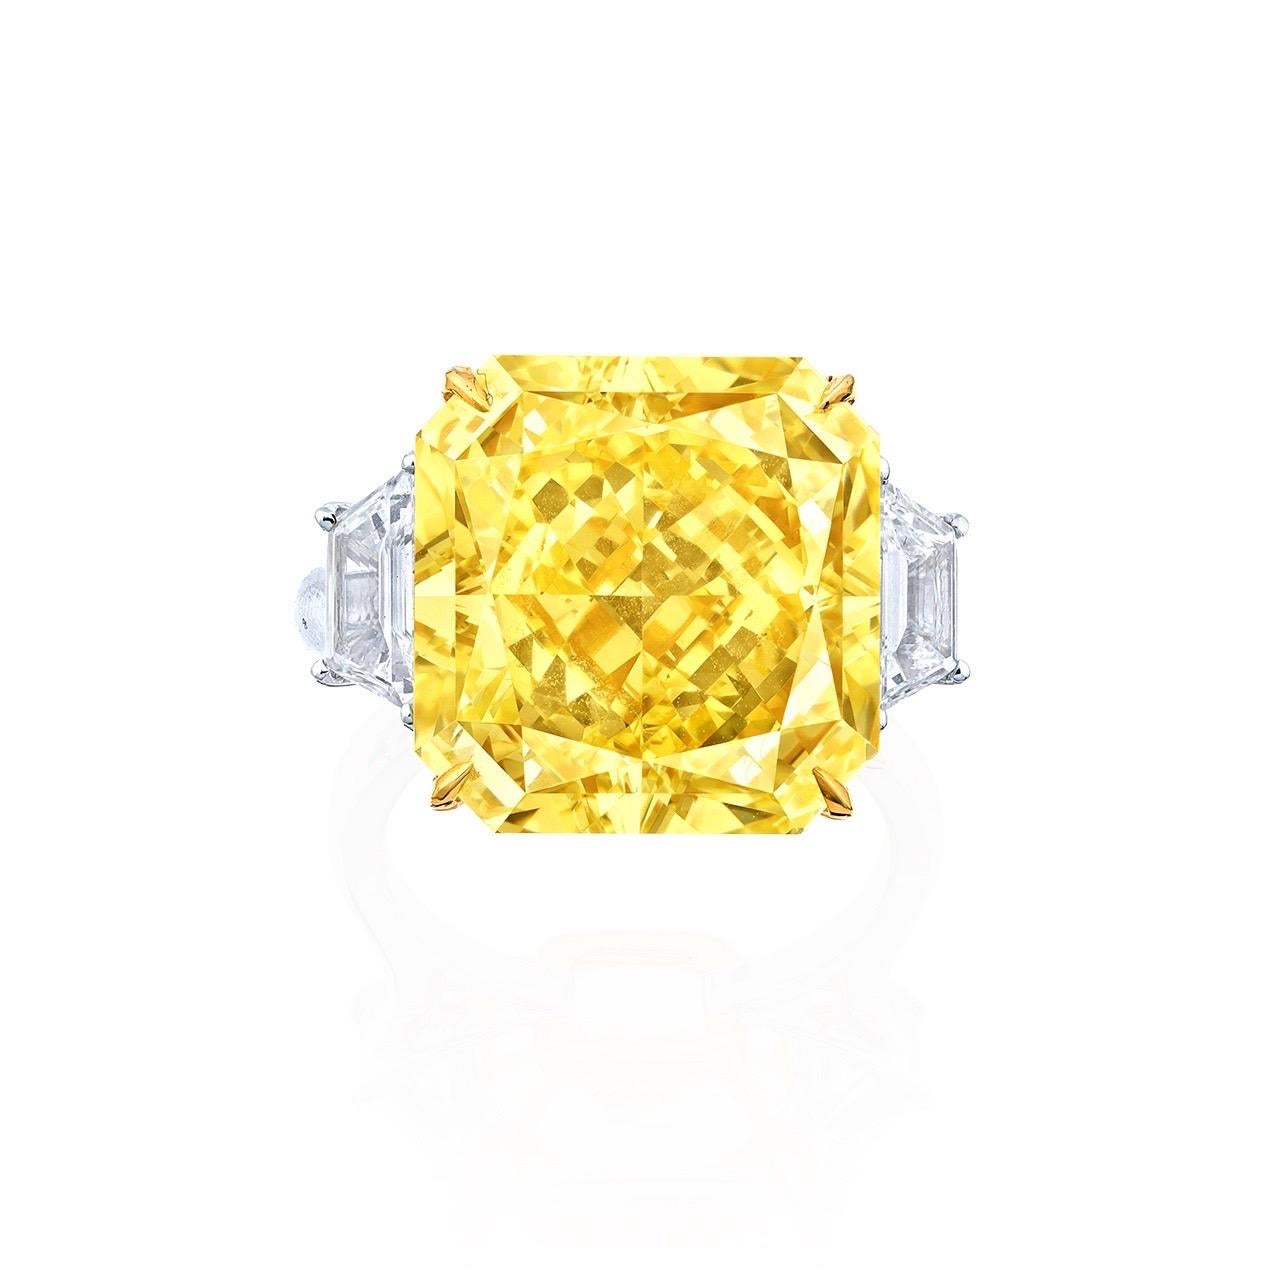 Radiant Cut Emilio Jewelry Gia Certified 18.00 Carat Fancy Intense Yellow Diamond Ring For Sale